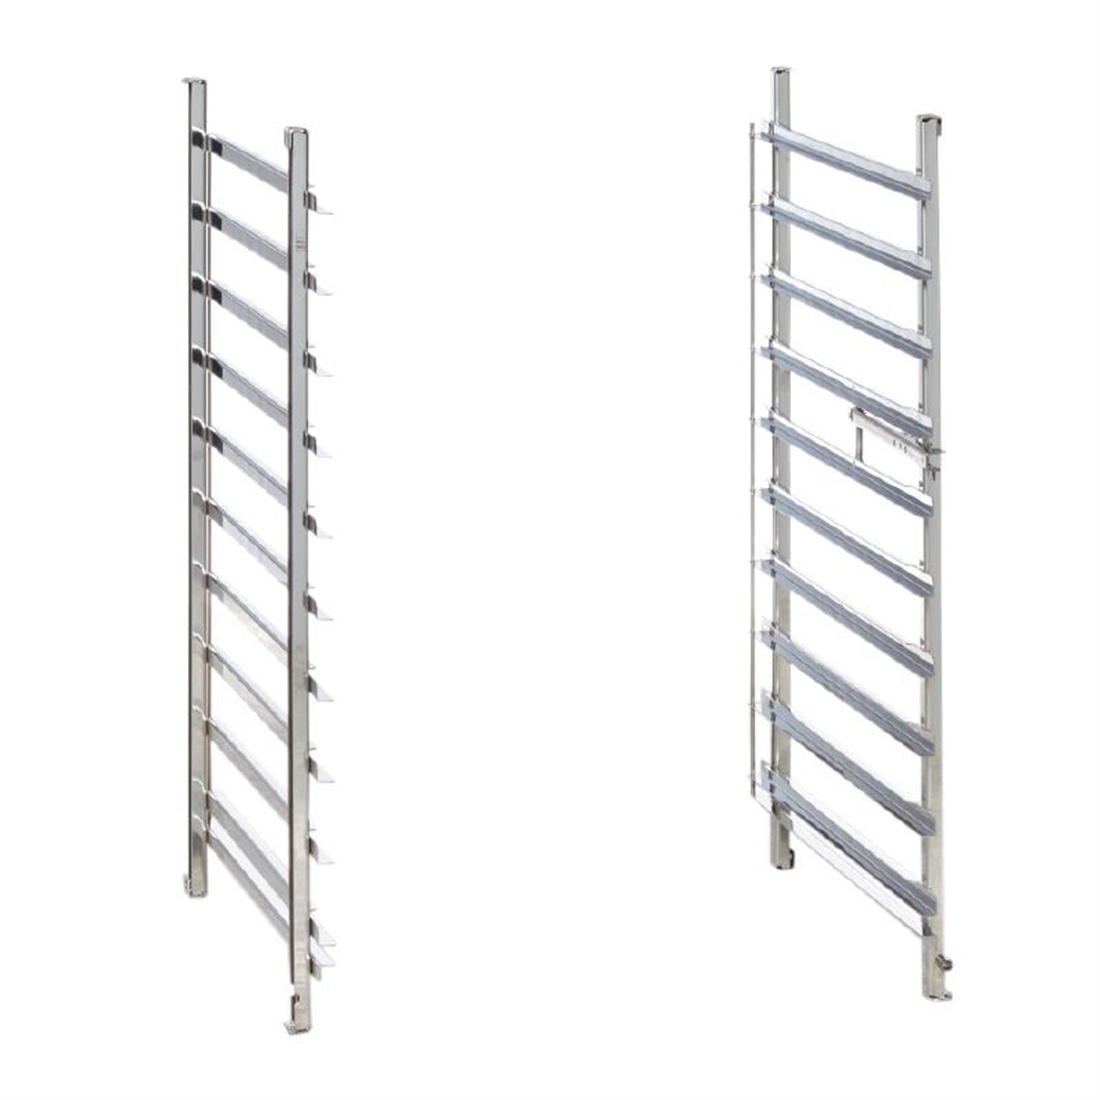 Rational 6 rack (68mm) grid shelves - Ref 60.61.243